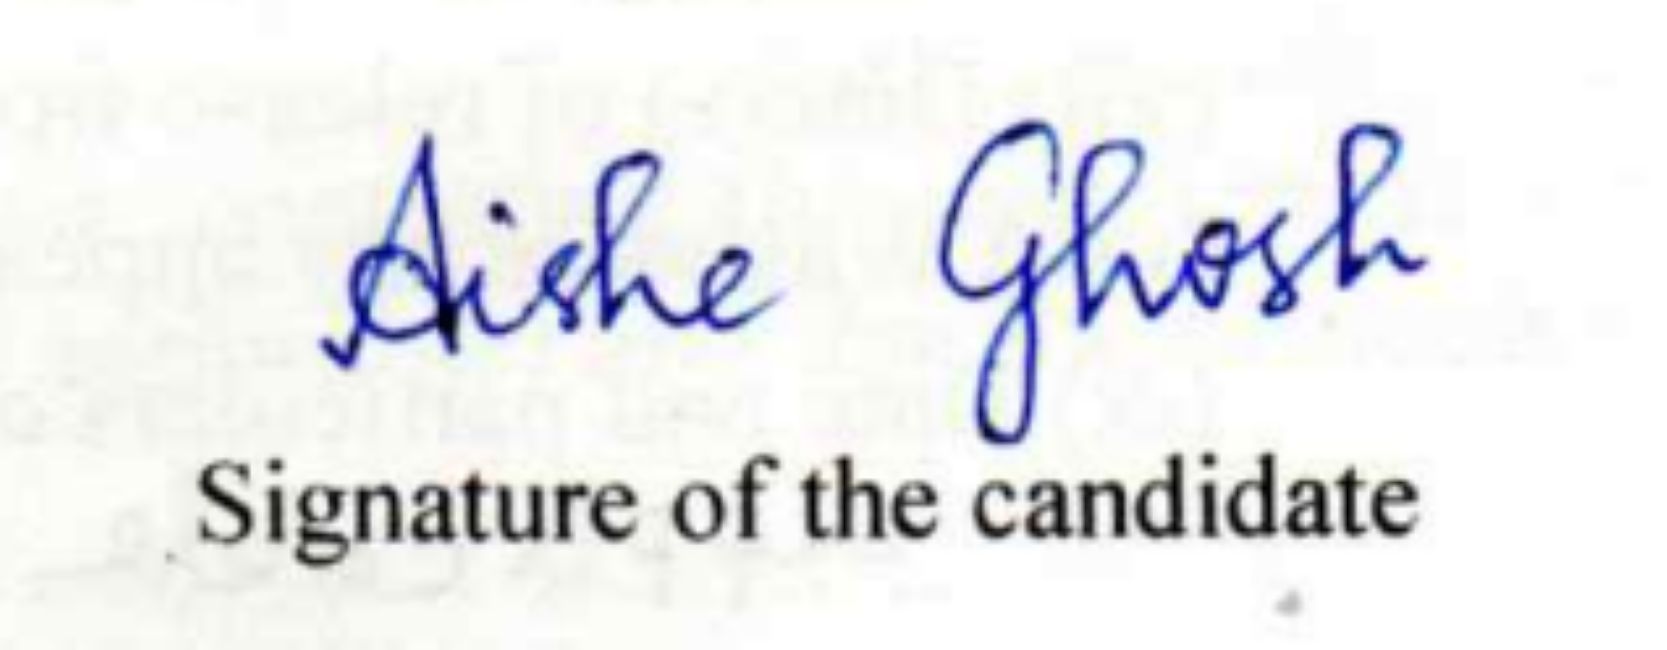 Aishe Ghosh's signature